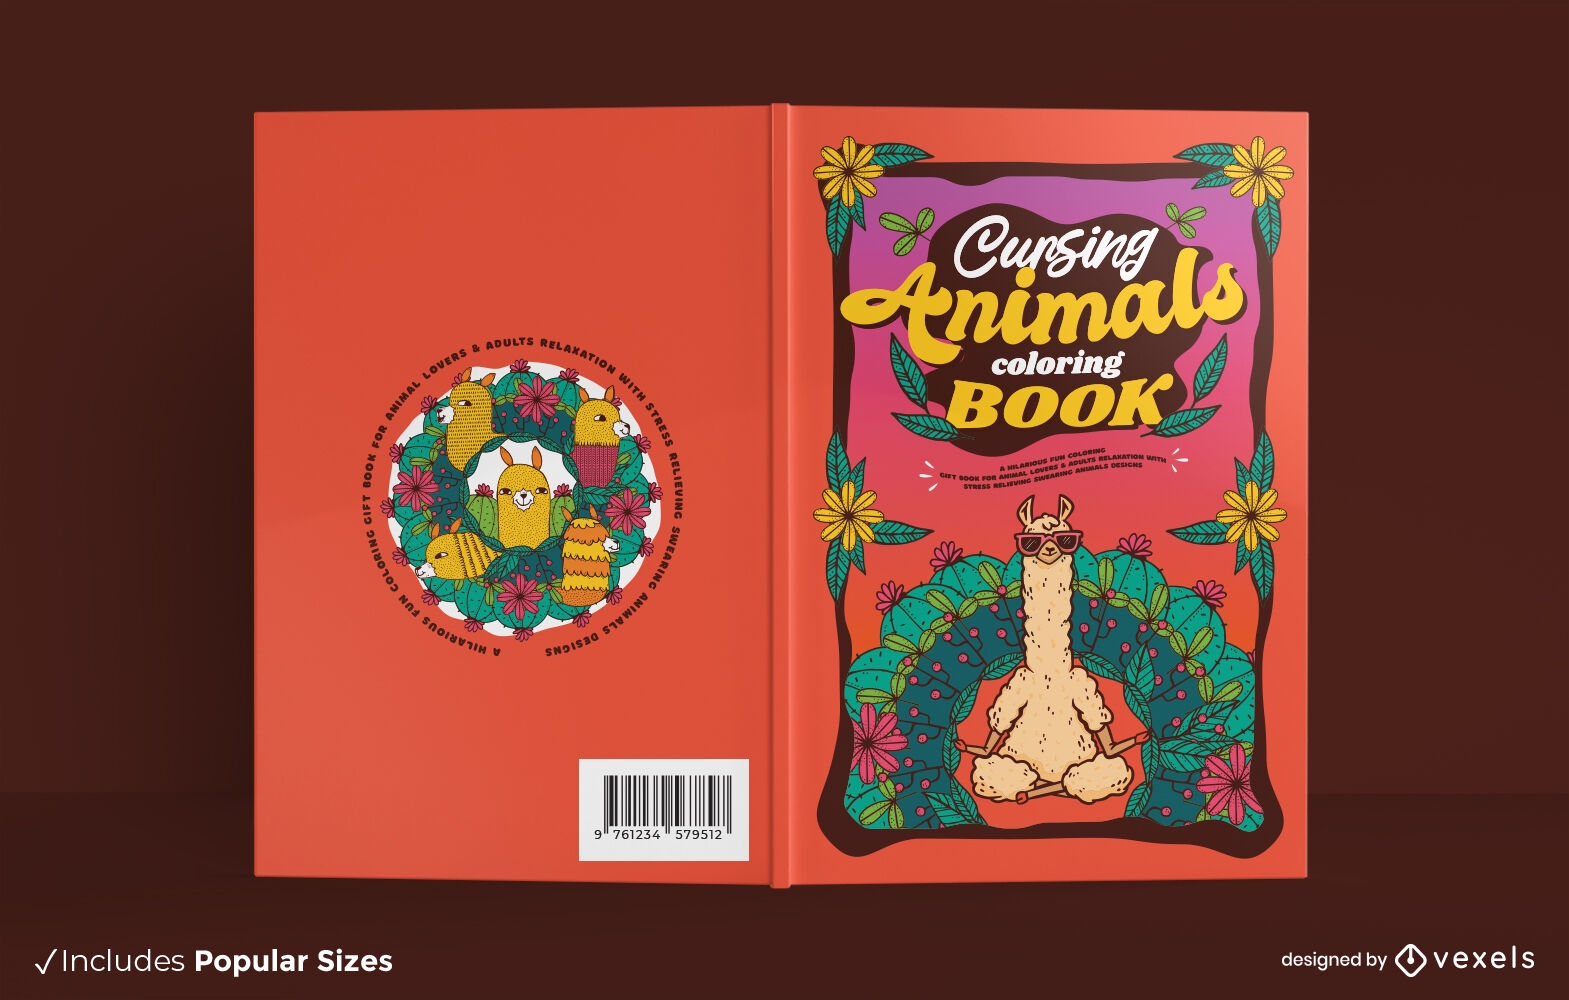 Cursing animals coloring book cover design